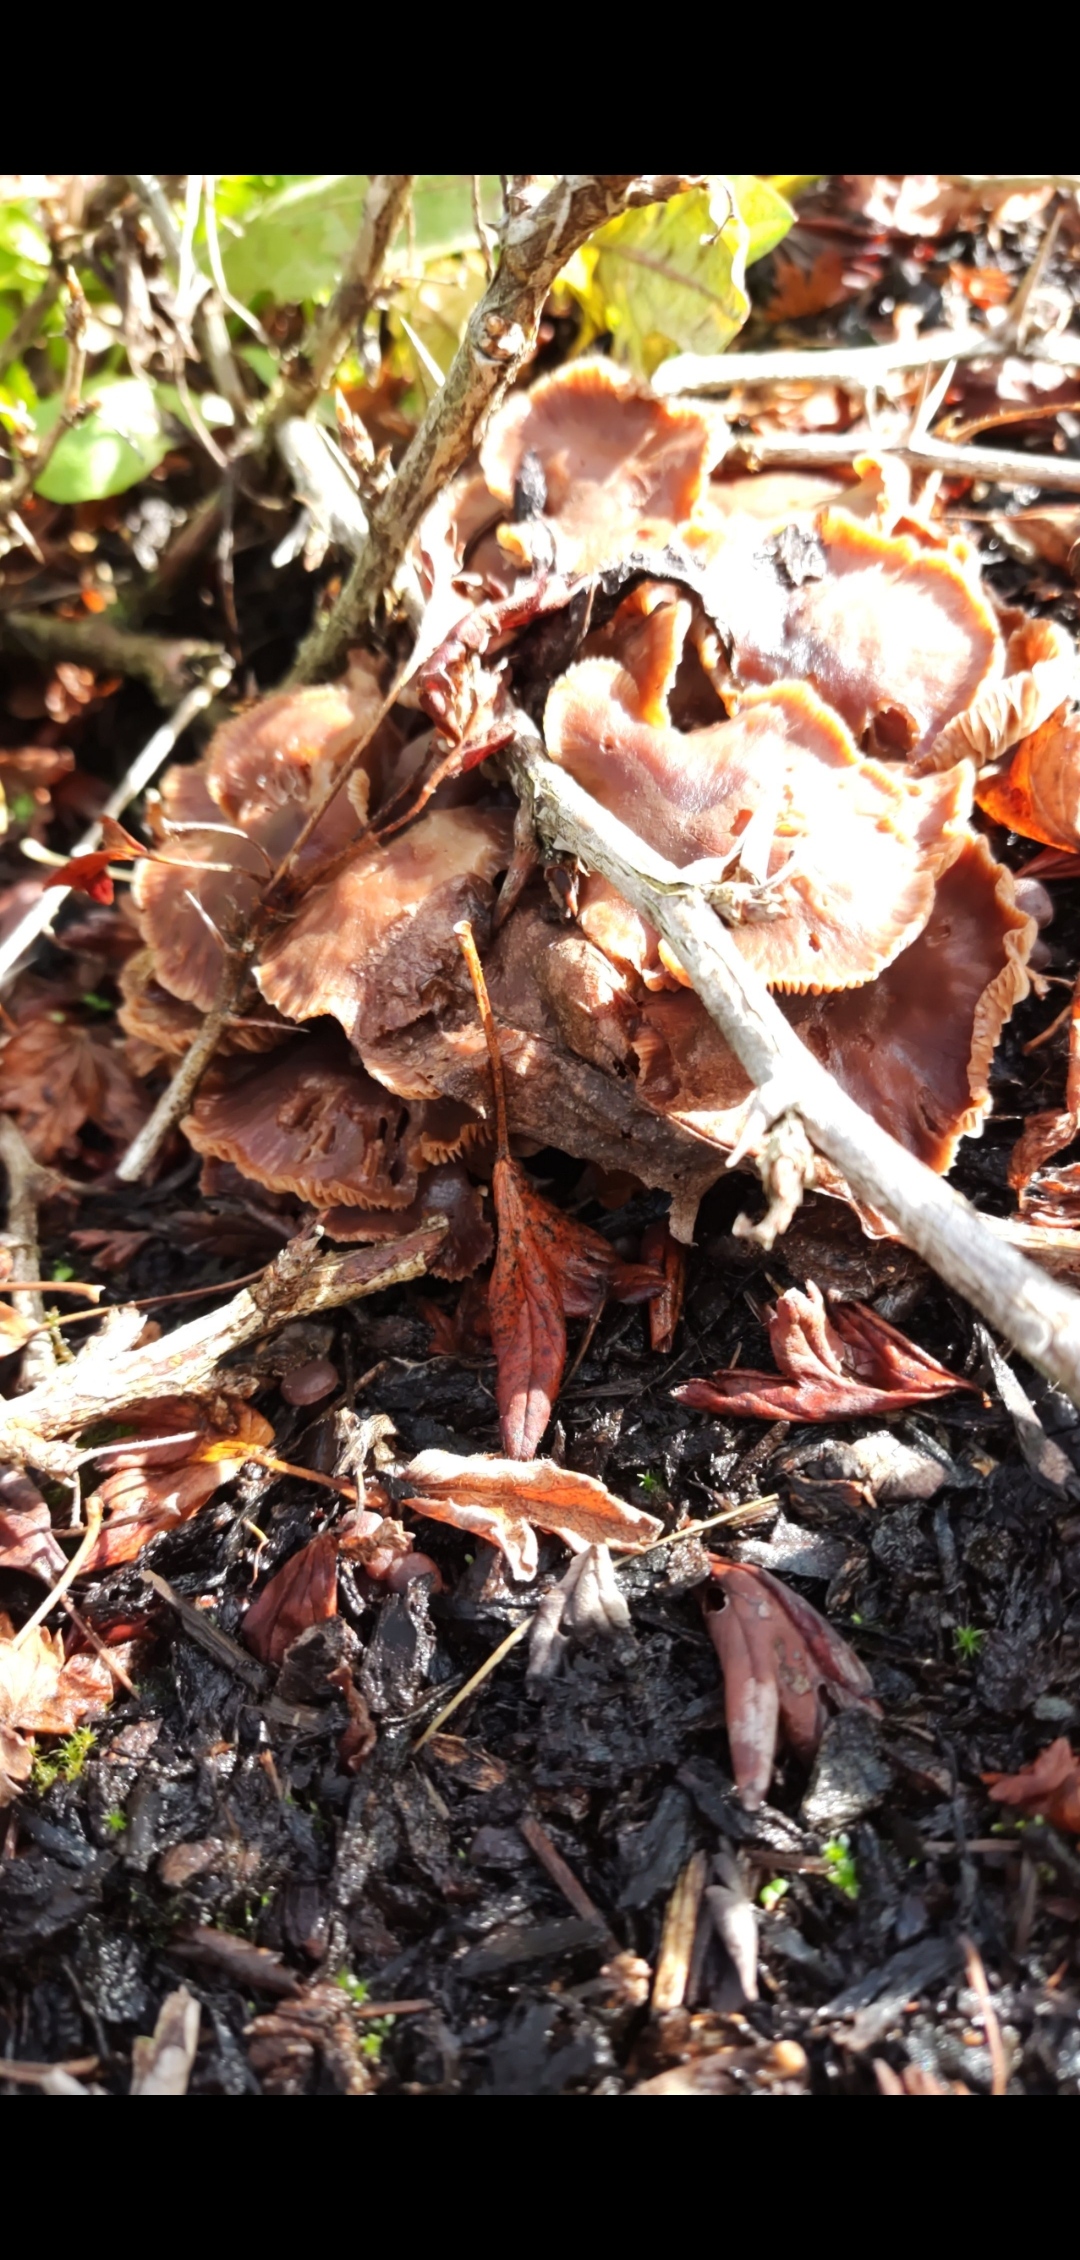 Picture of a orange-brown wavy mushroom